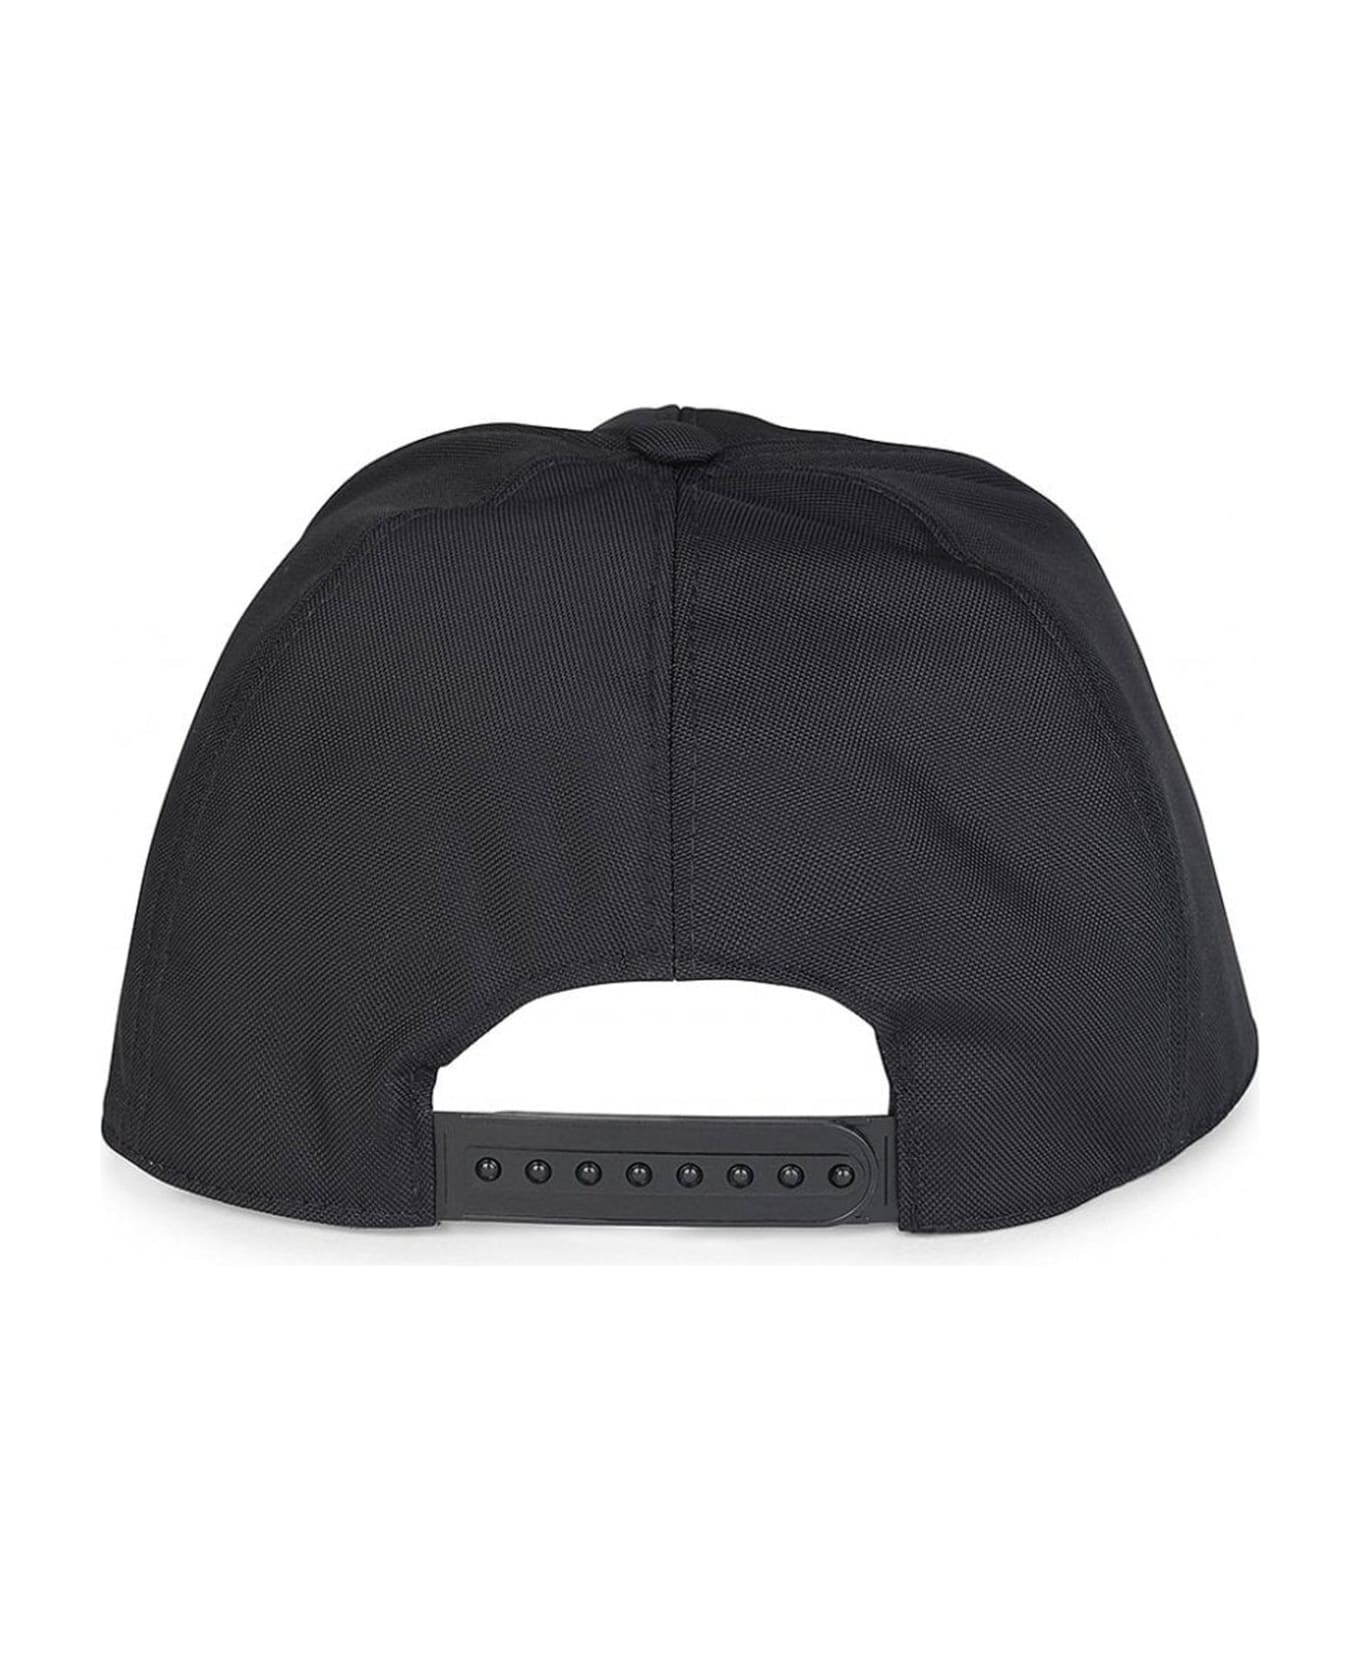 Givenchy Shark Print Cap - Black 帽子